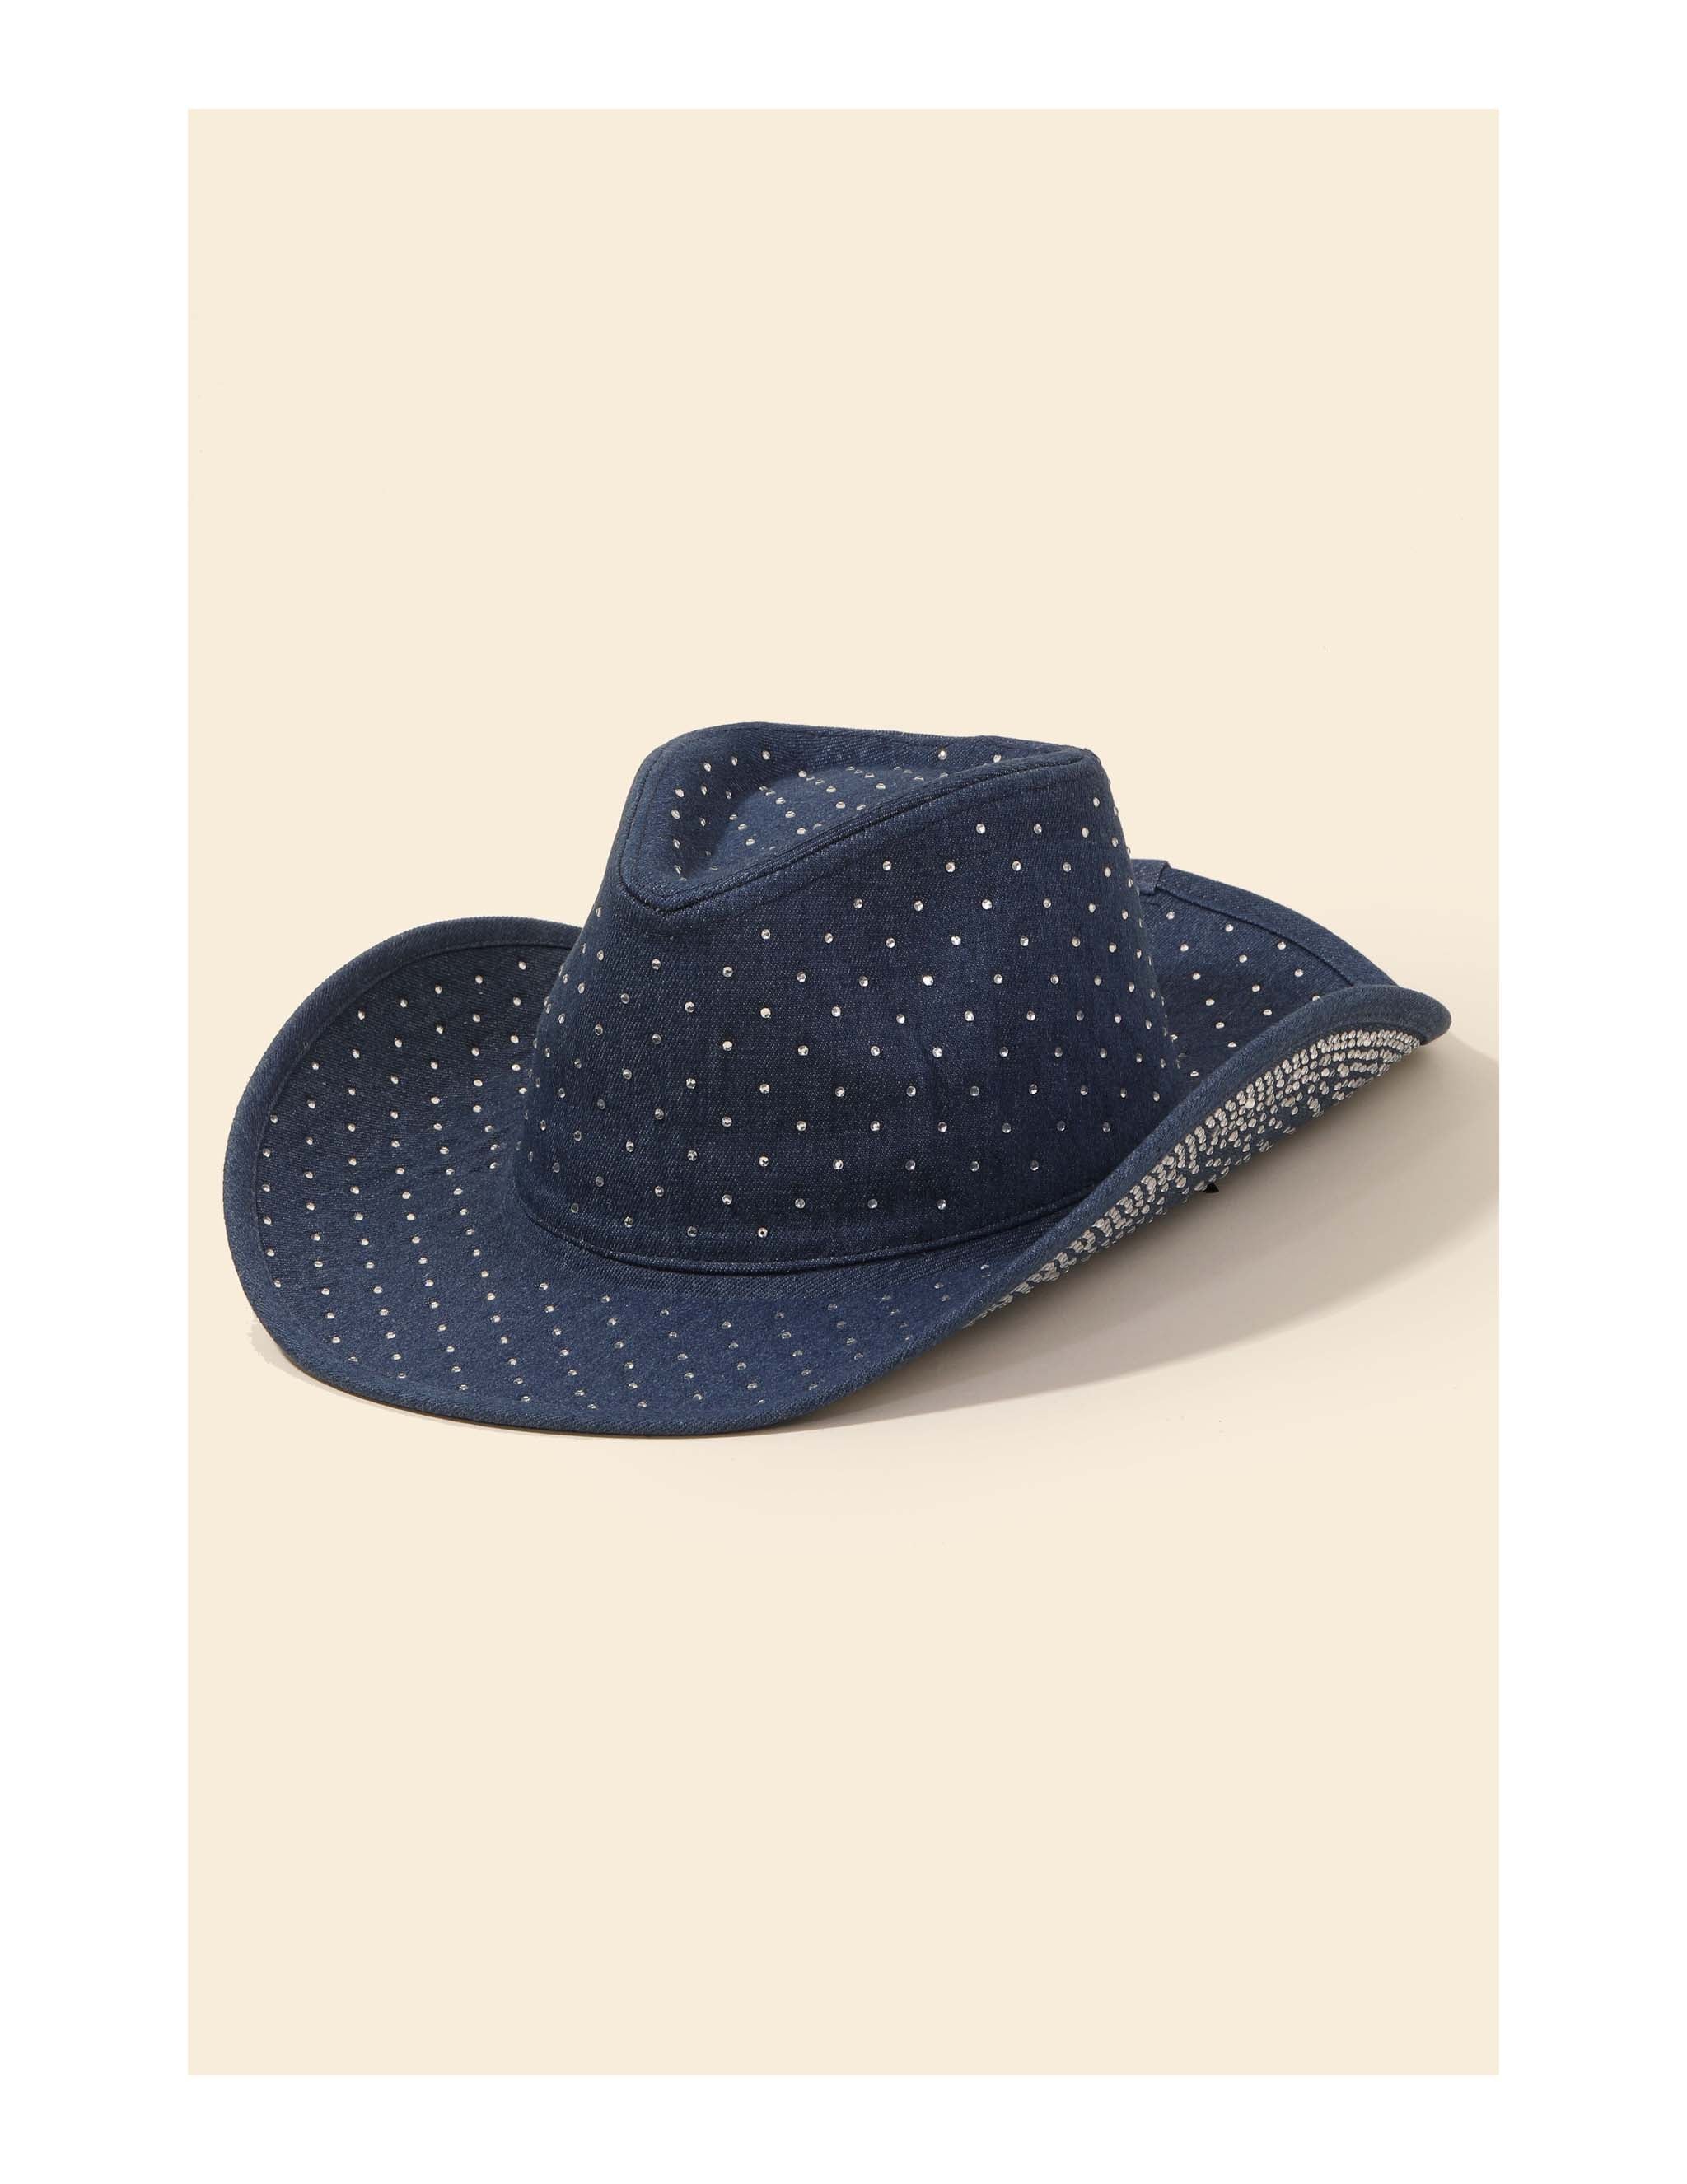 Studded Denim Cowboy Hat